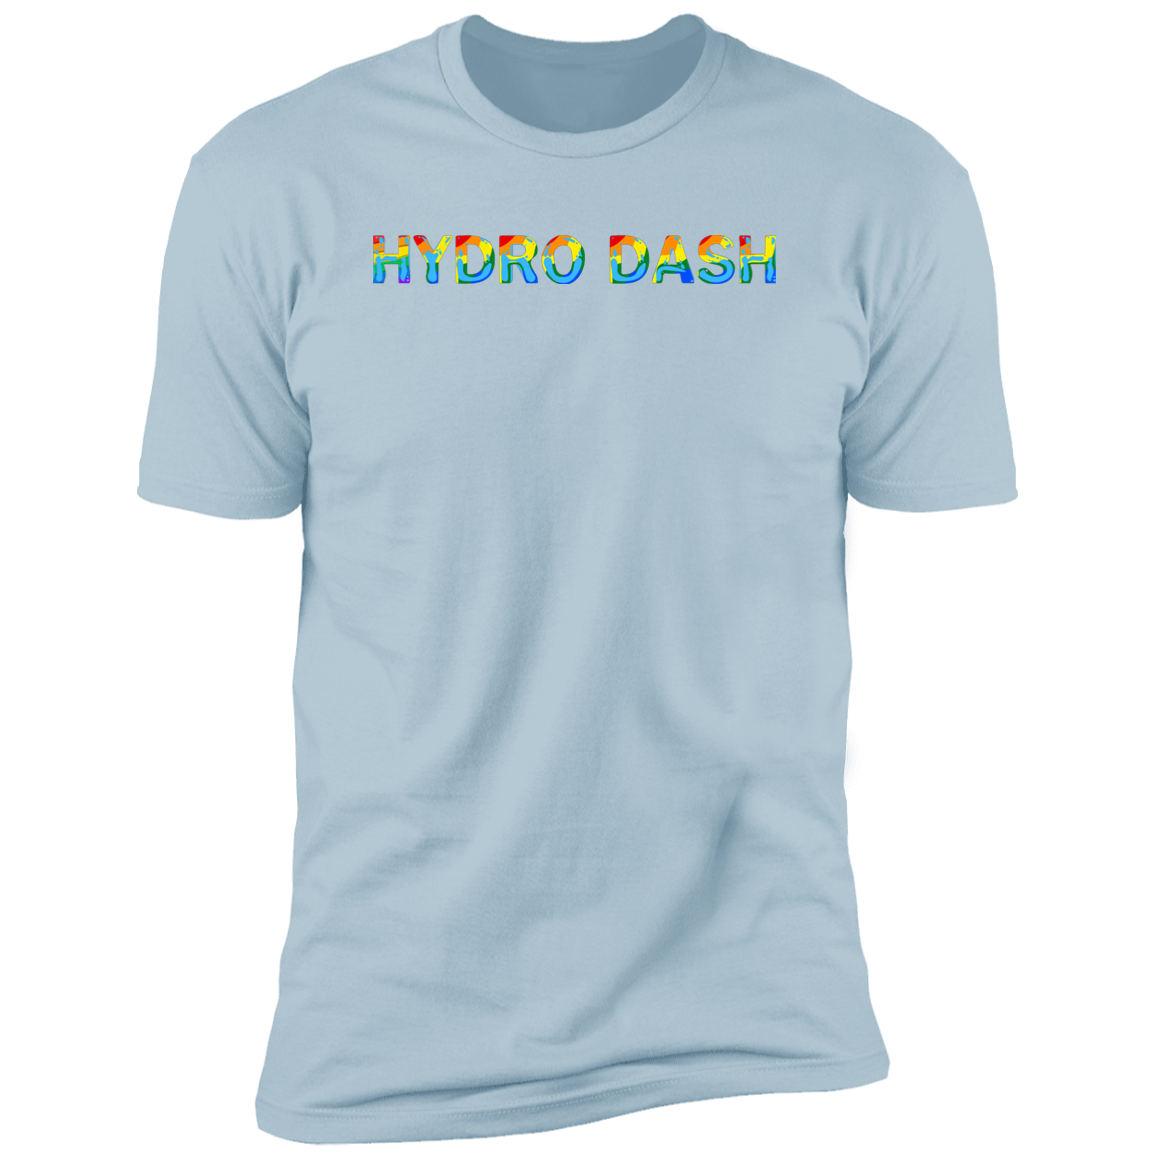  Hydro Dash Pride 2023  t-shirt, dog pride dog Hydro dash shirt for humans, in light blue